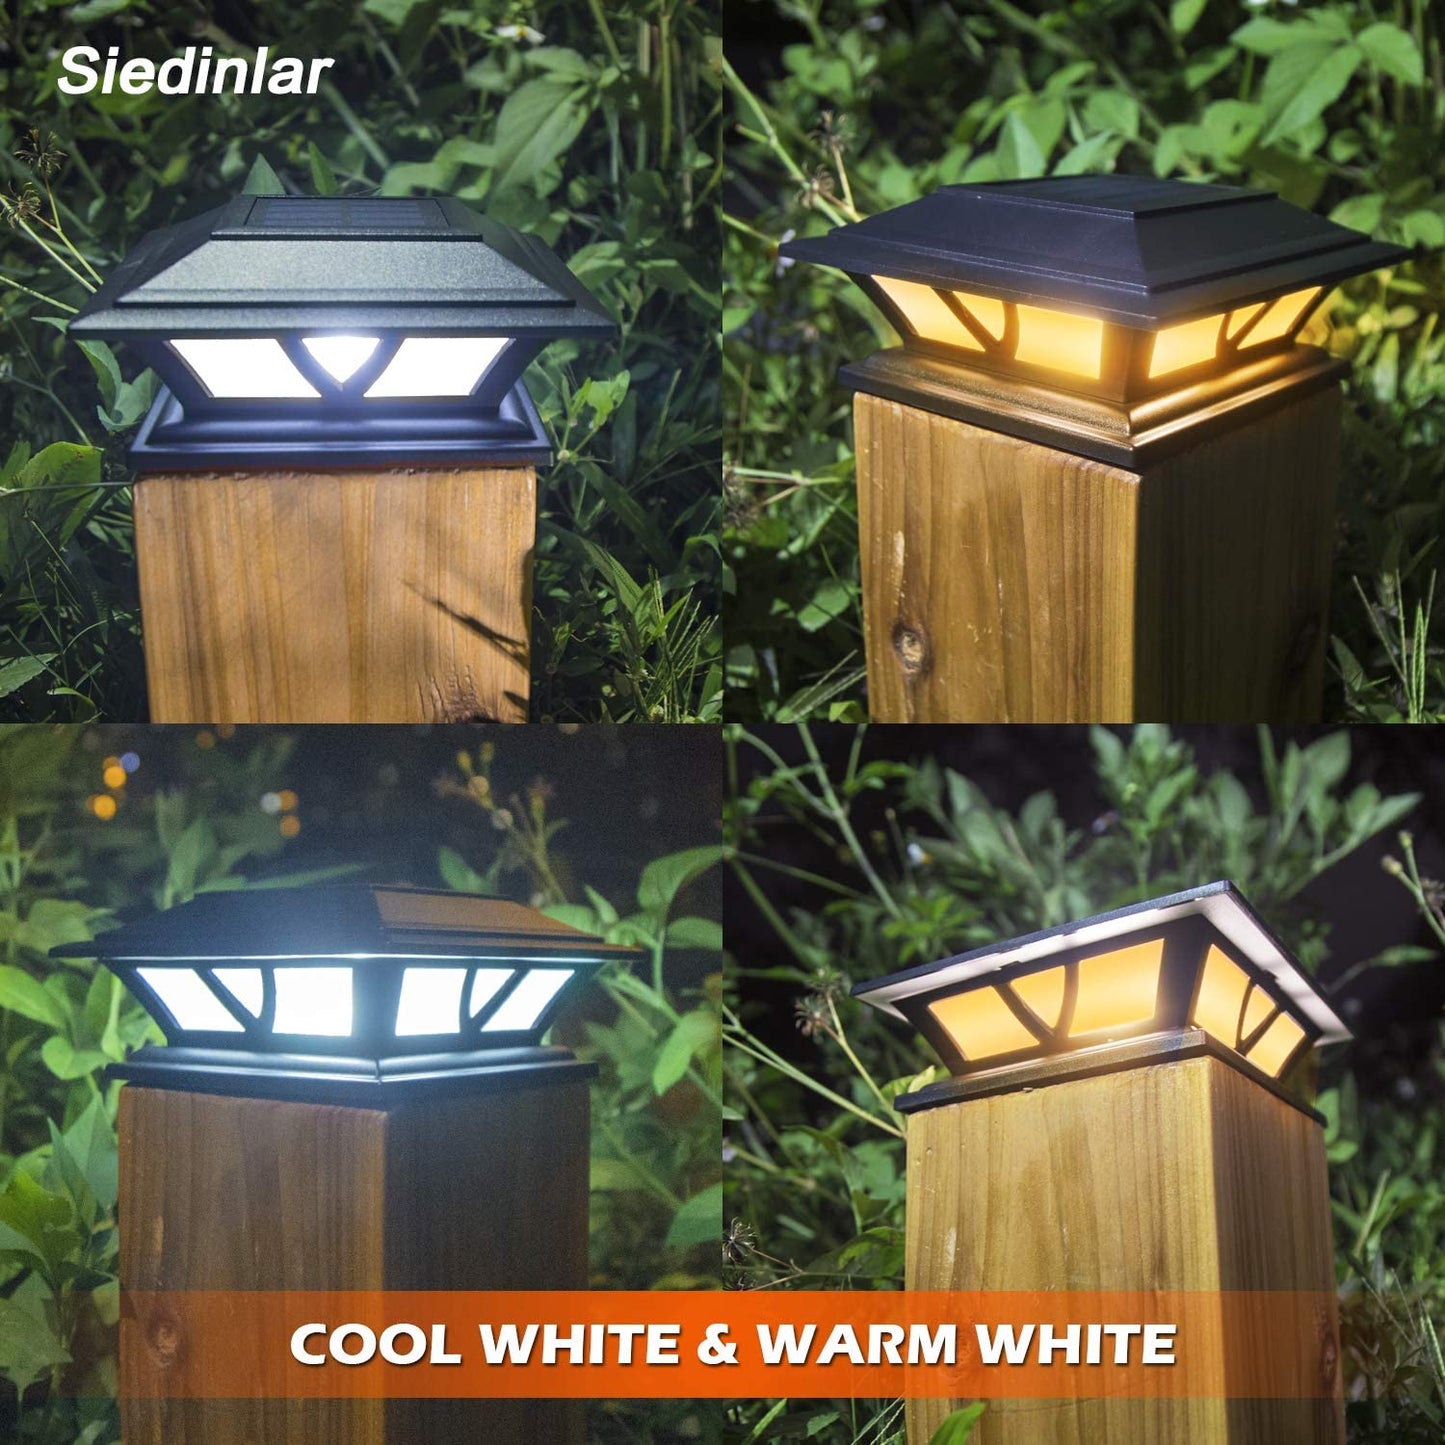 Siedinlar SD116B Solar Post Lights Outdoor 2 Modes LED Deck Fence Cap Light for 4x4 5x5 6x6 Posts Patio Garden Decoration Warm White/Cool White Lighting Black (2 Pack)